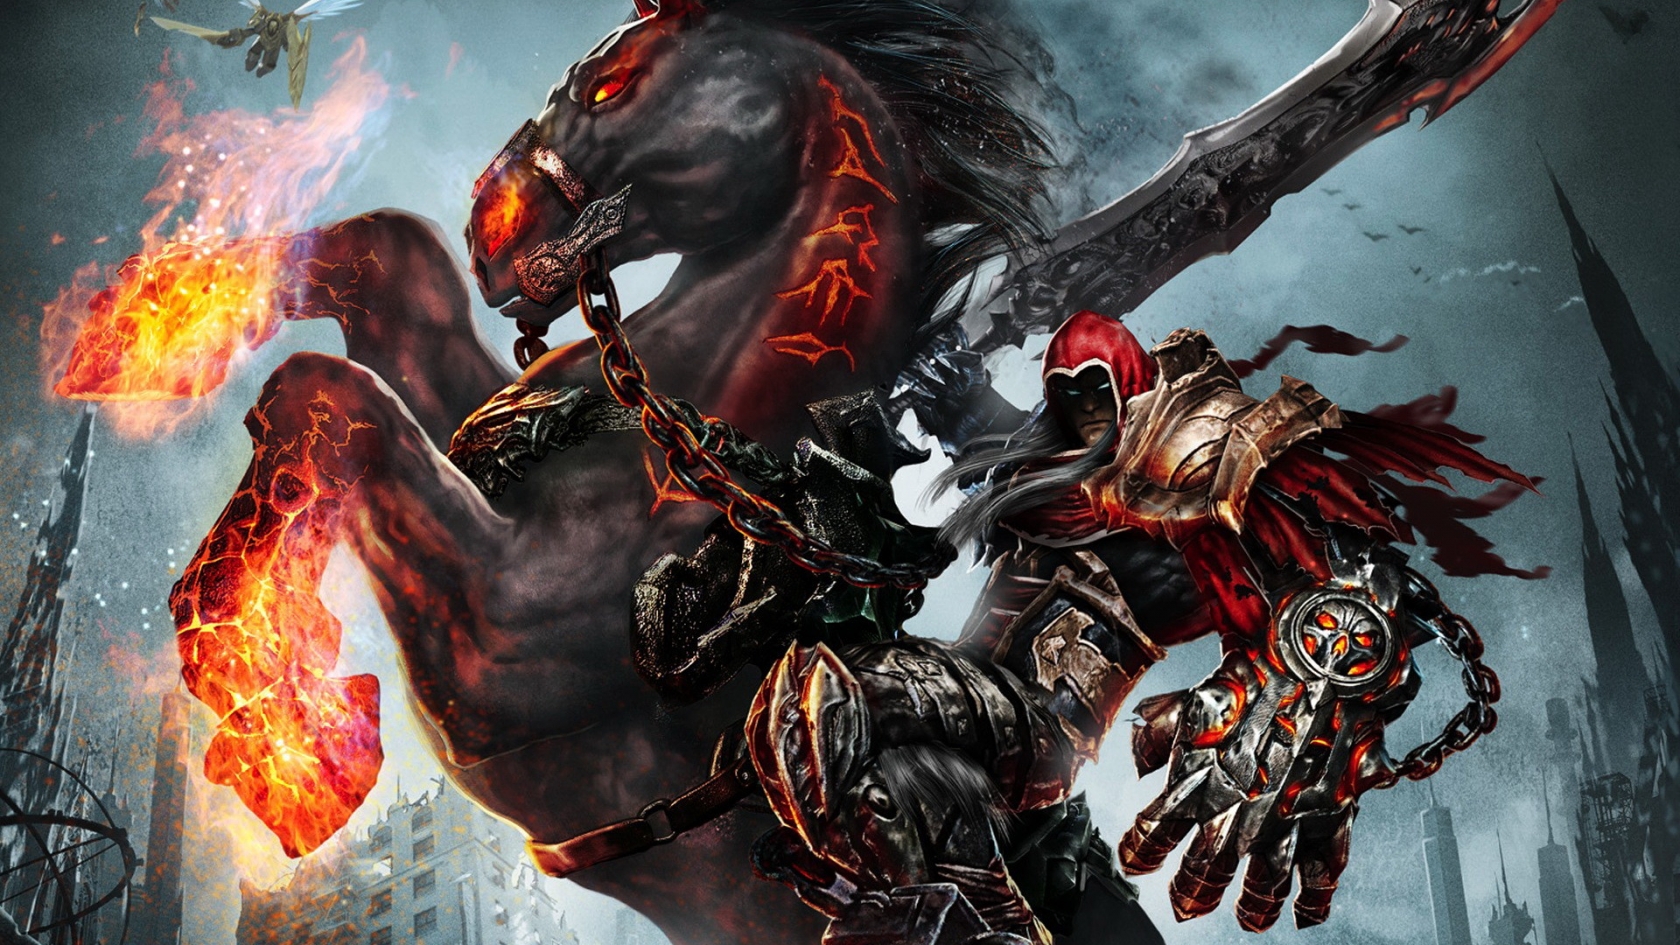 Darksiders Wrath of War Video Game for 1680 x 945 HDTV resolution